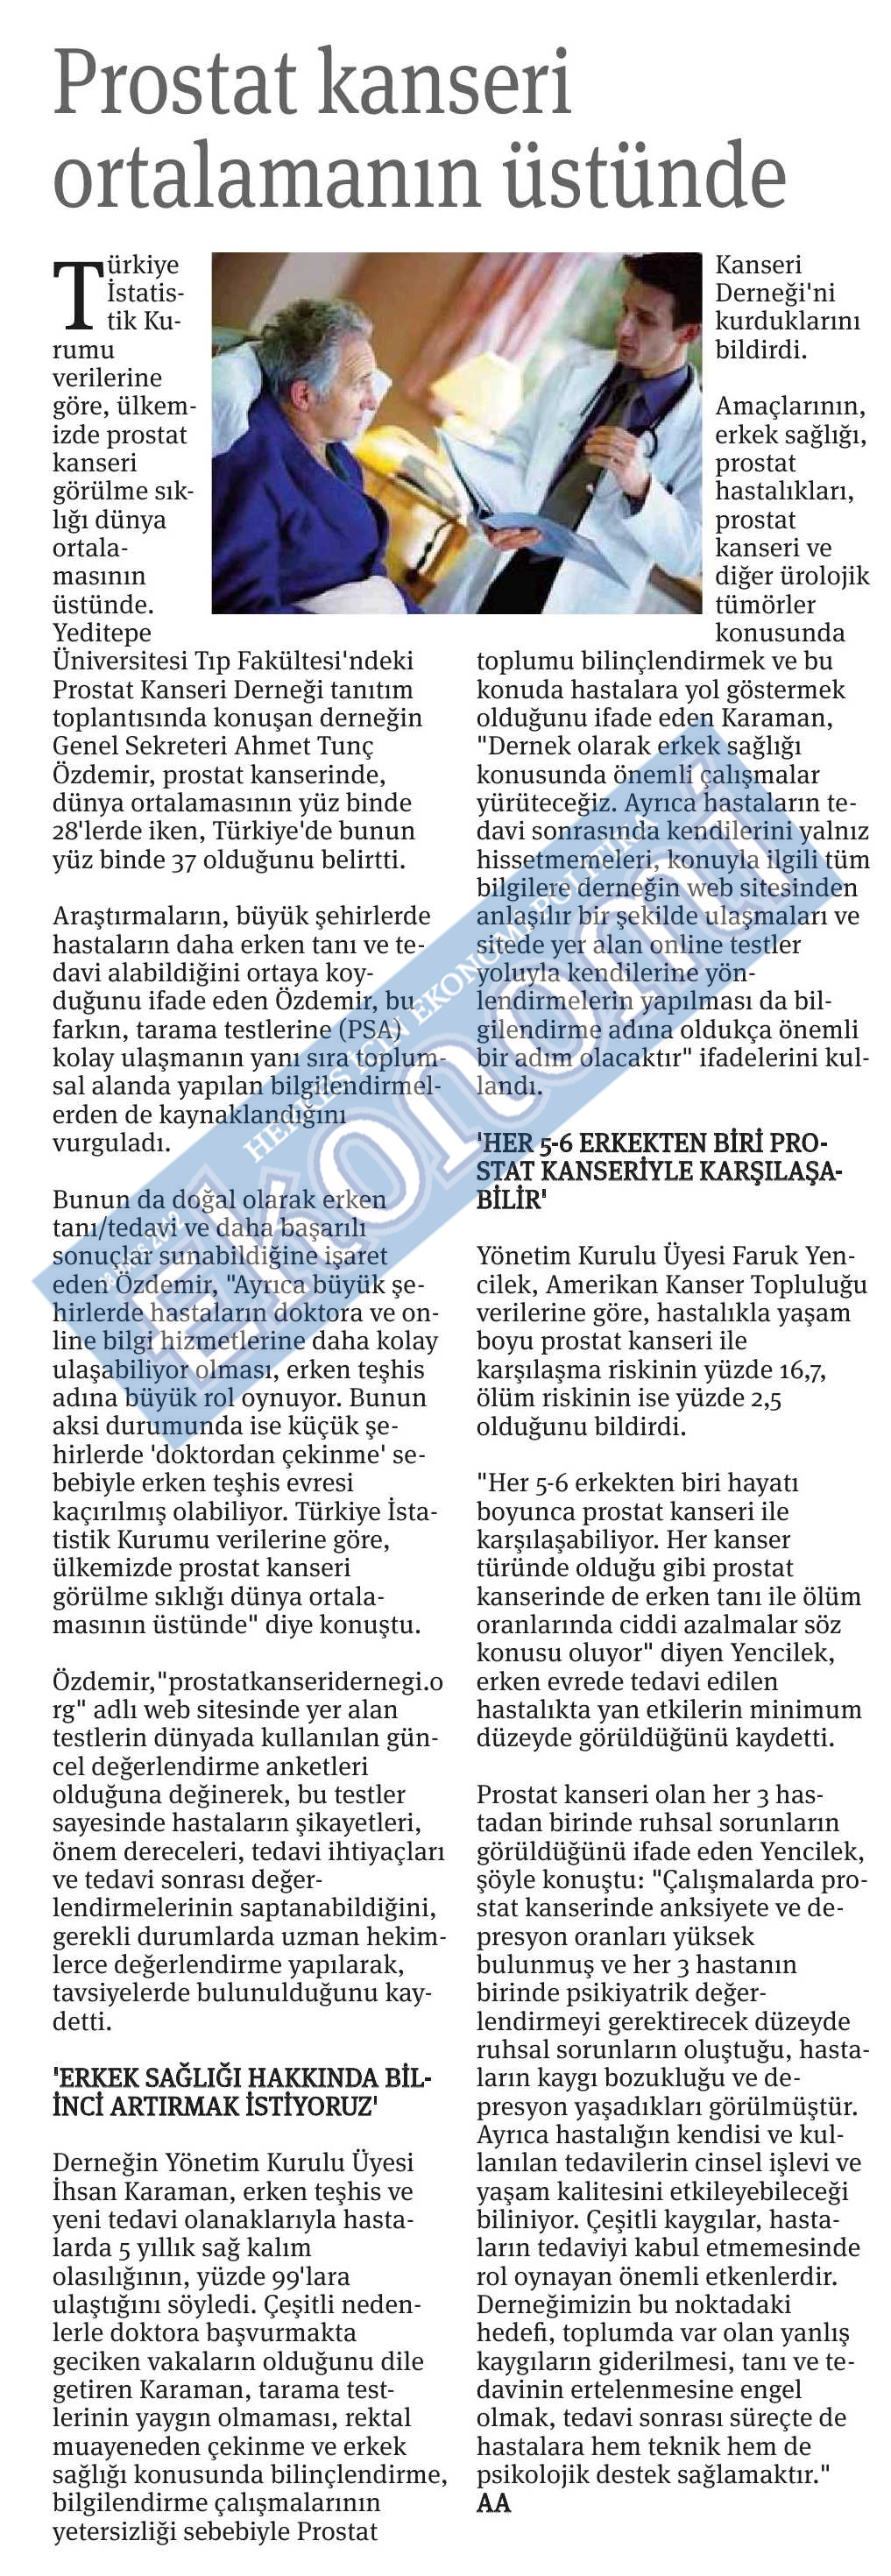 Ekonomi Gazetesi 19.01.2014